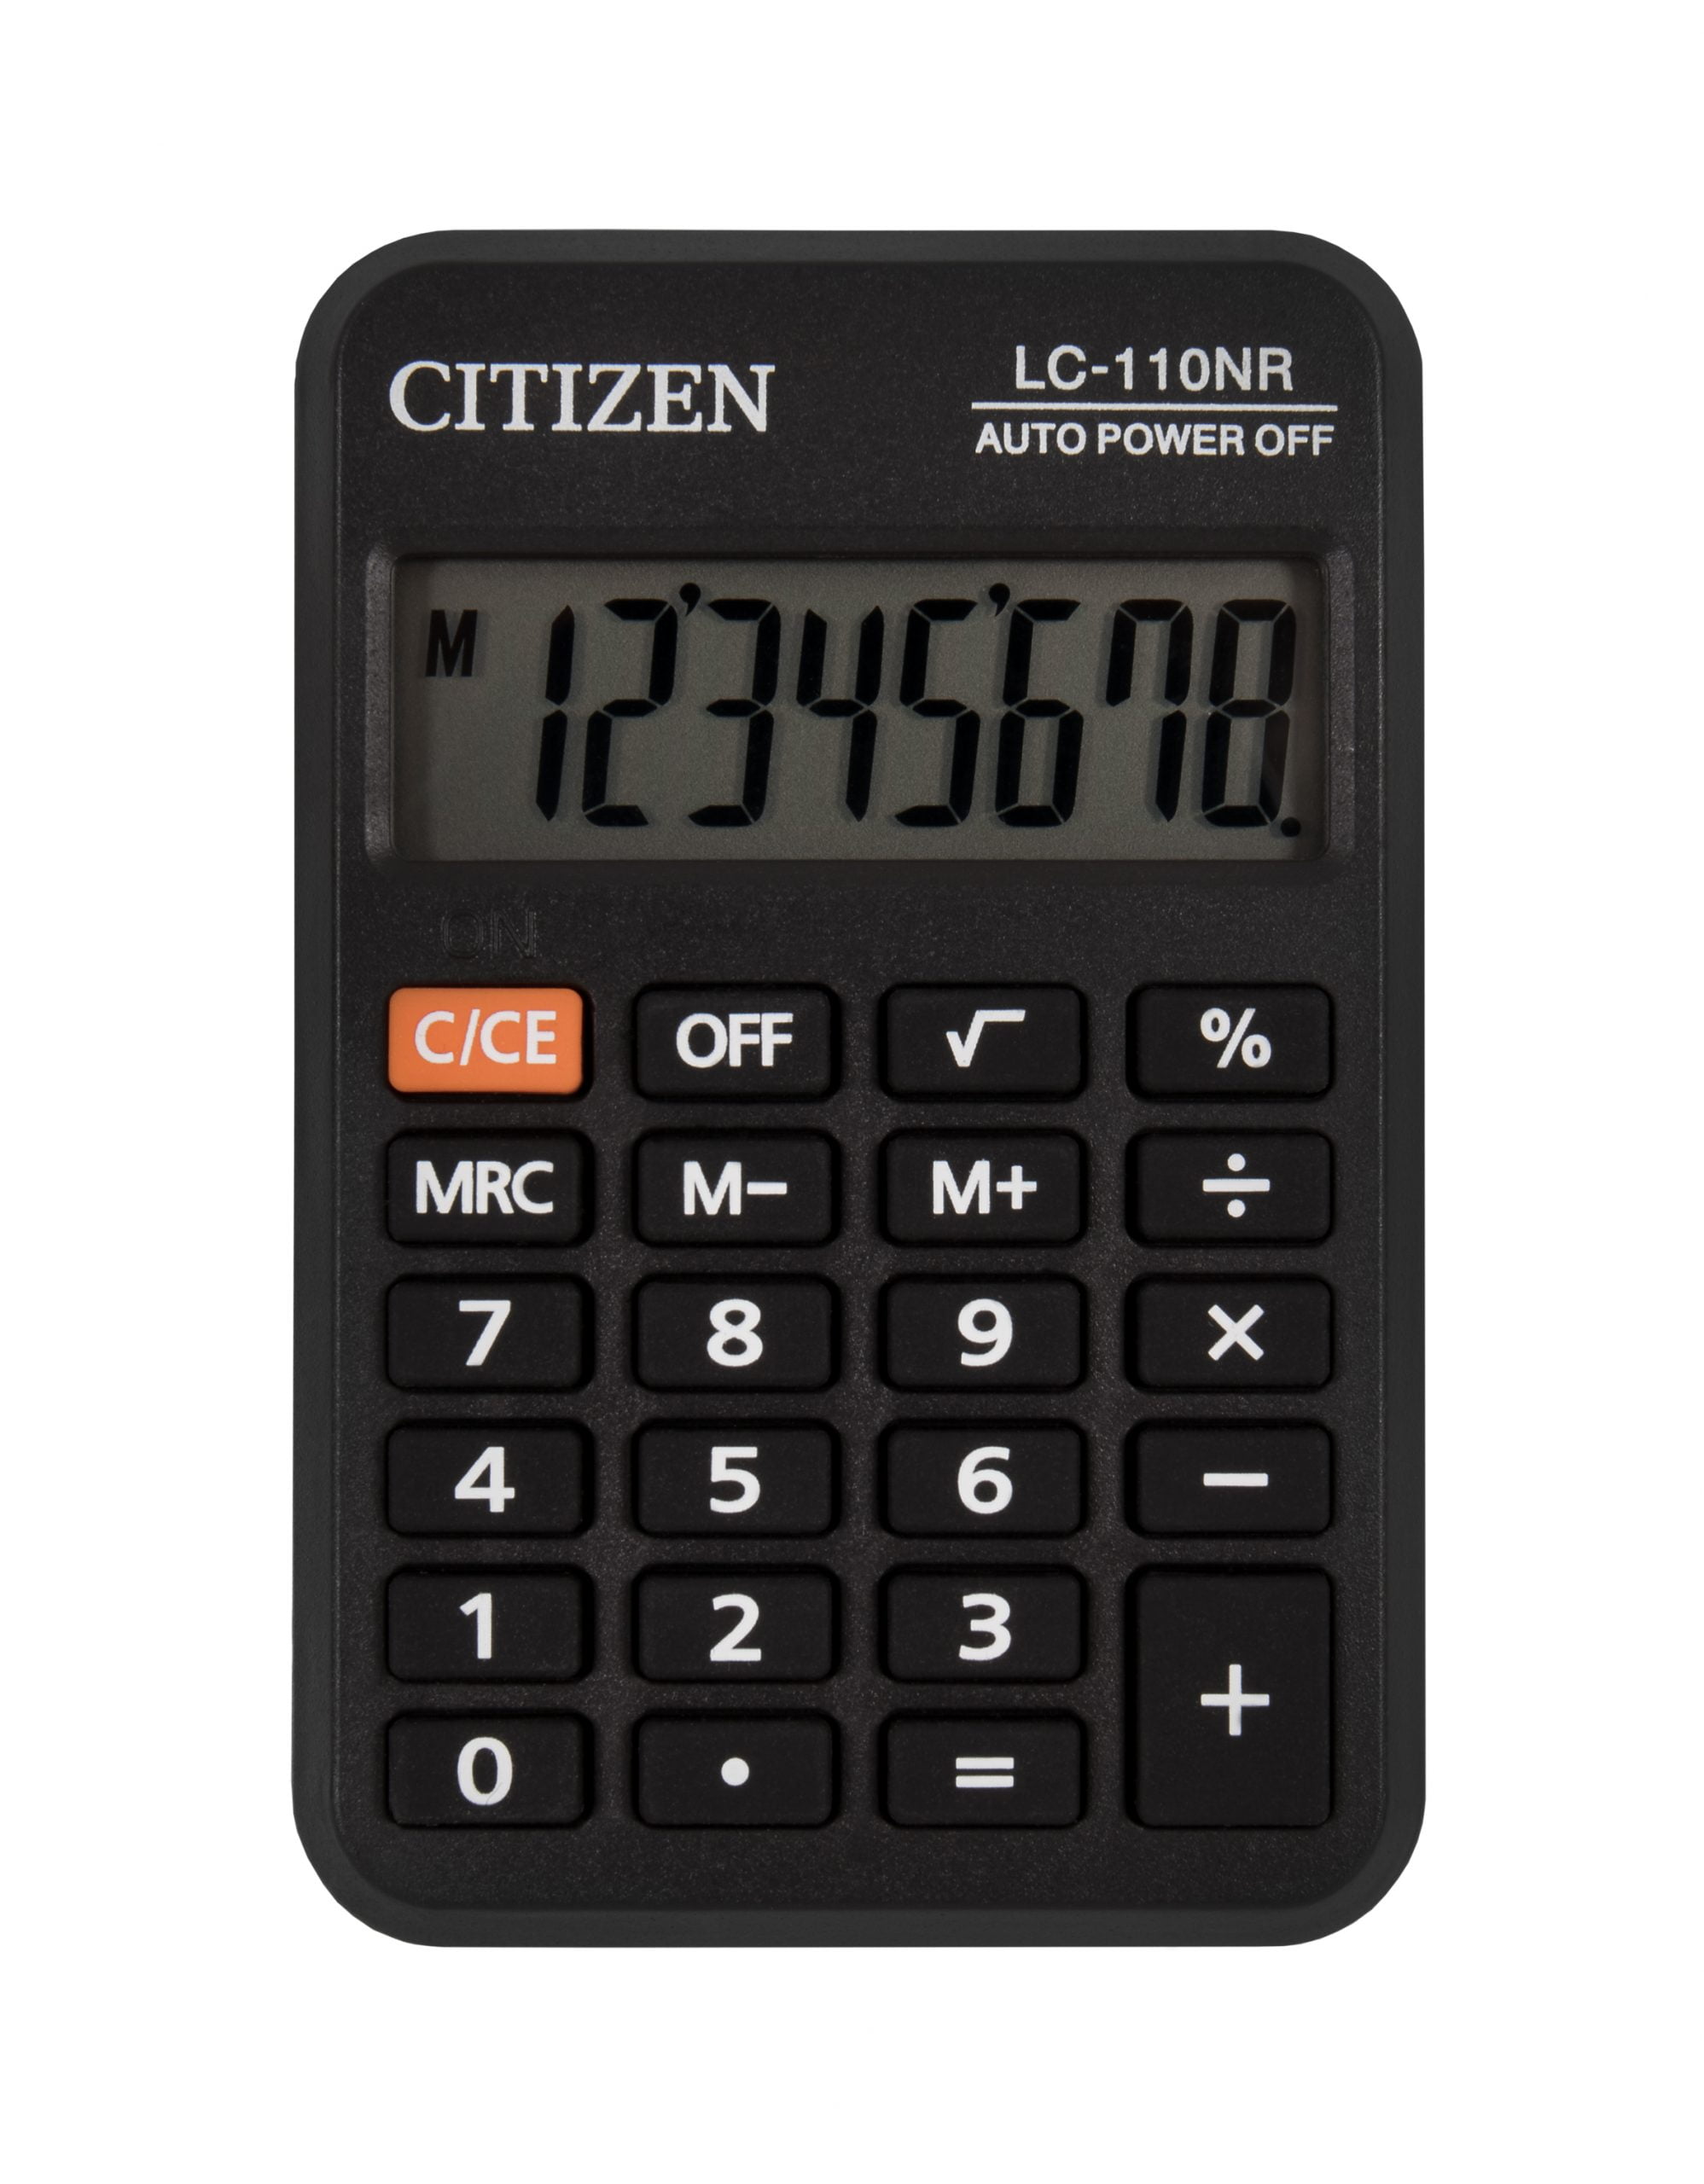 Citizen_LC-110NR_front